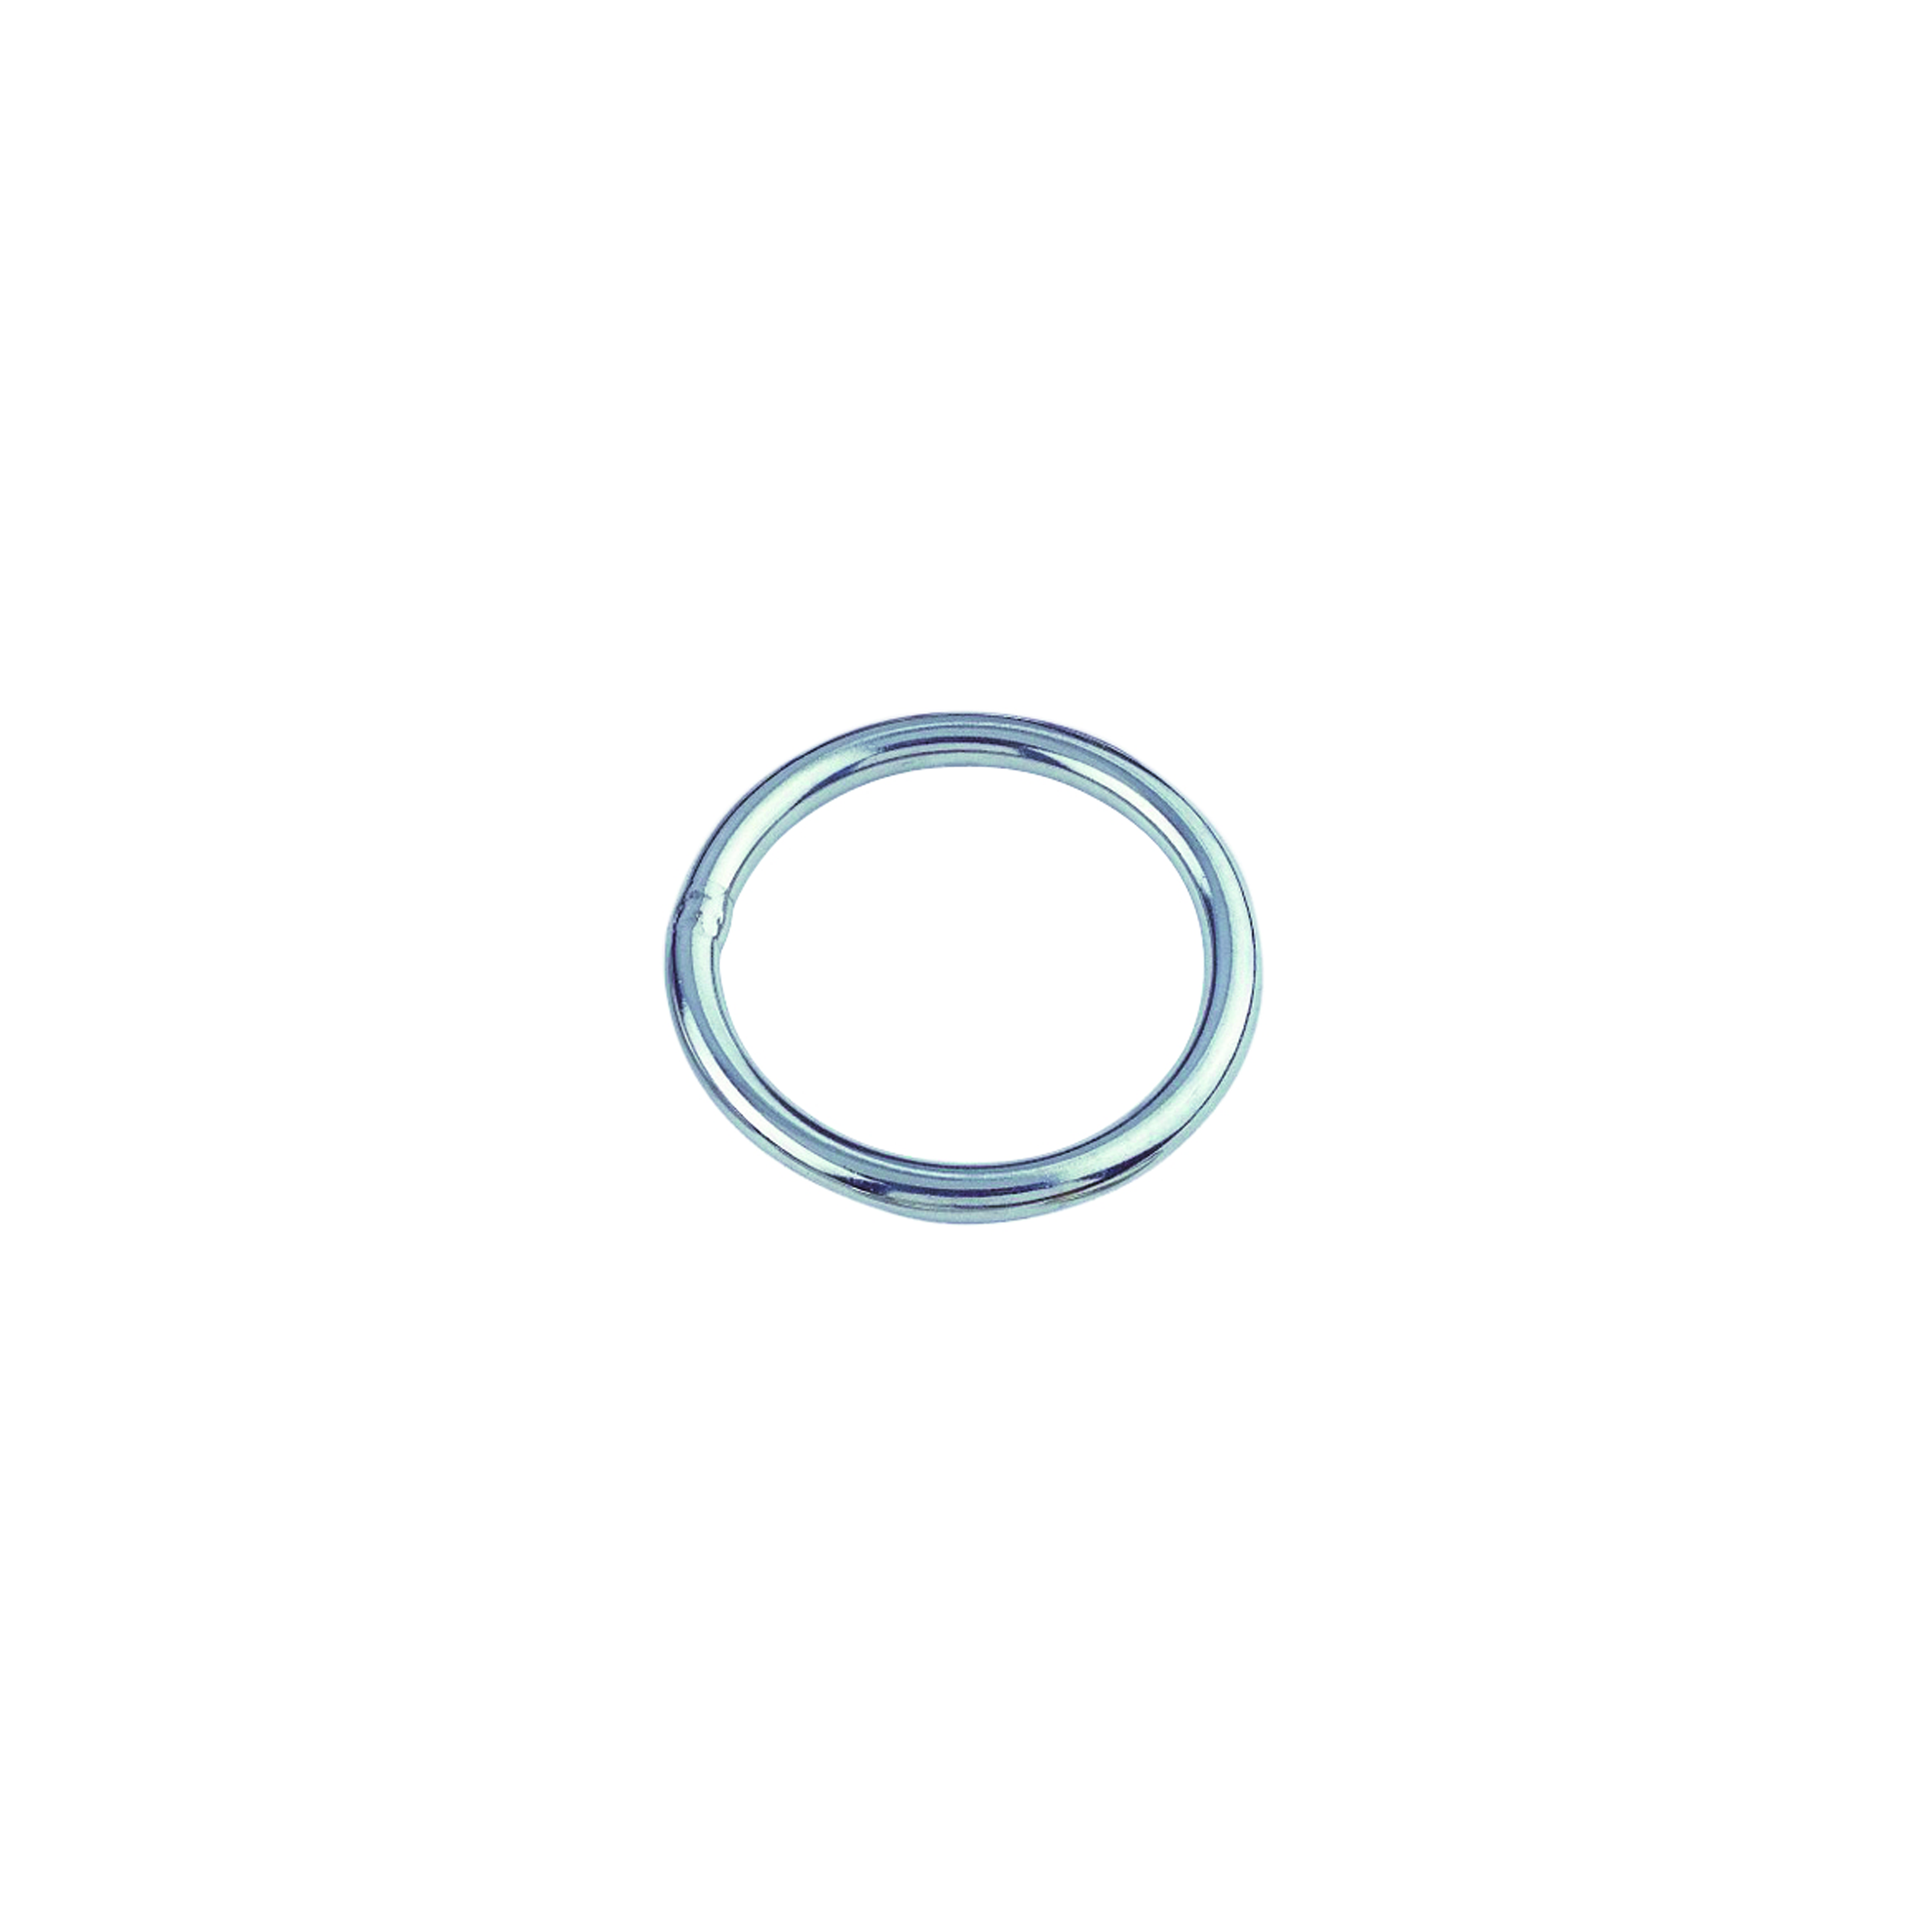 50 STCK / PCS. Ring, round A4  3x15mm